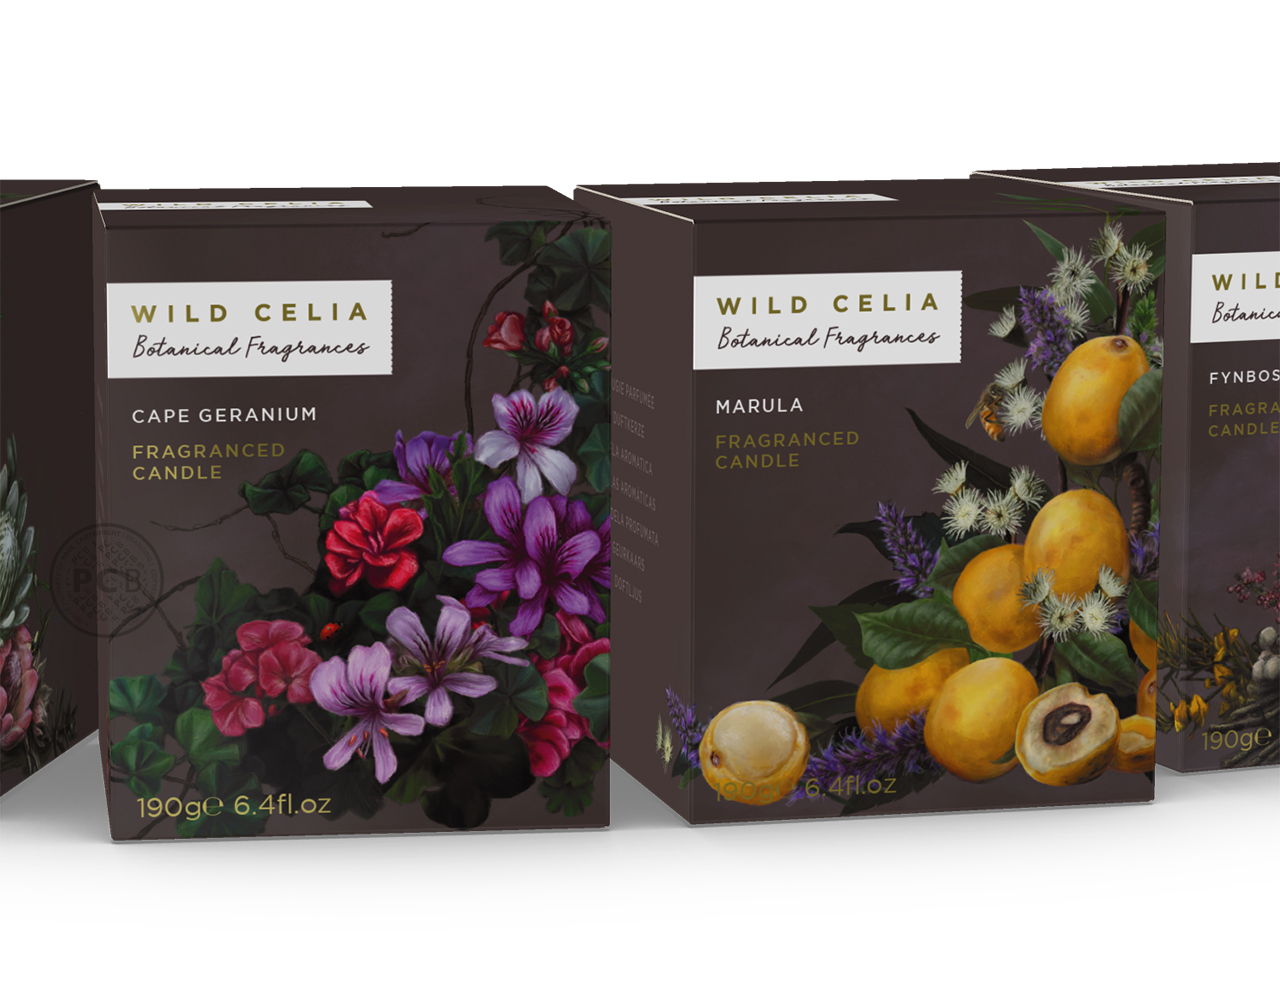 Close-up of Wild Celia Botanical fragrances candle cartons.